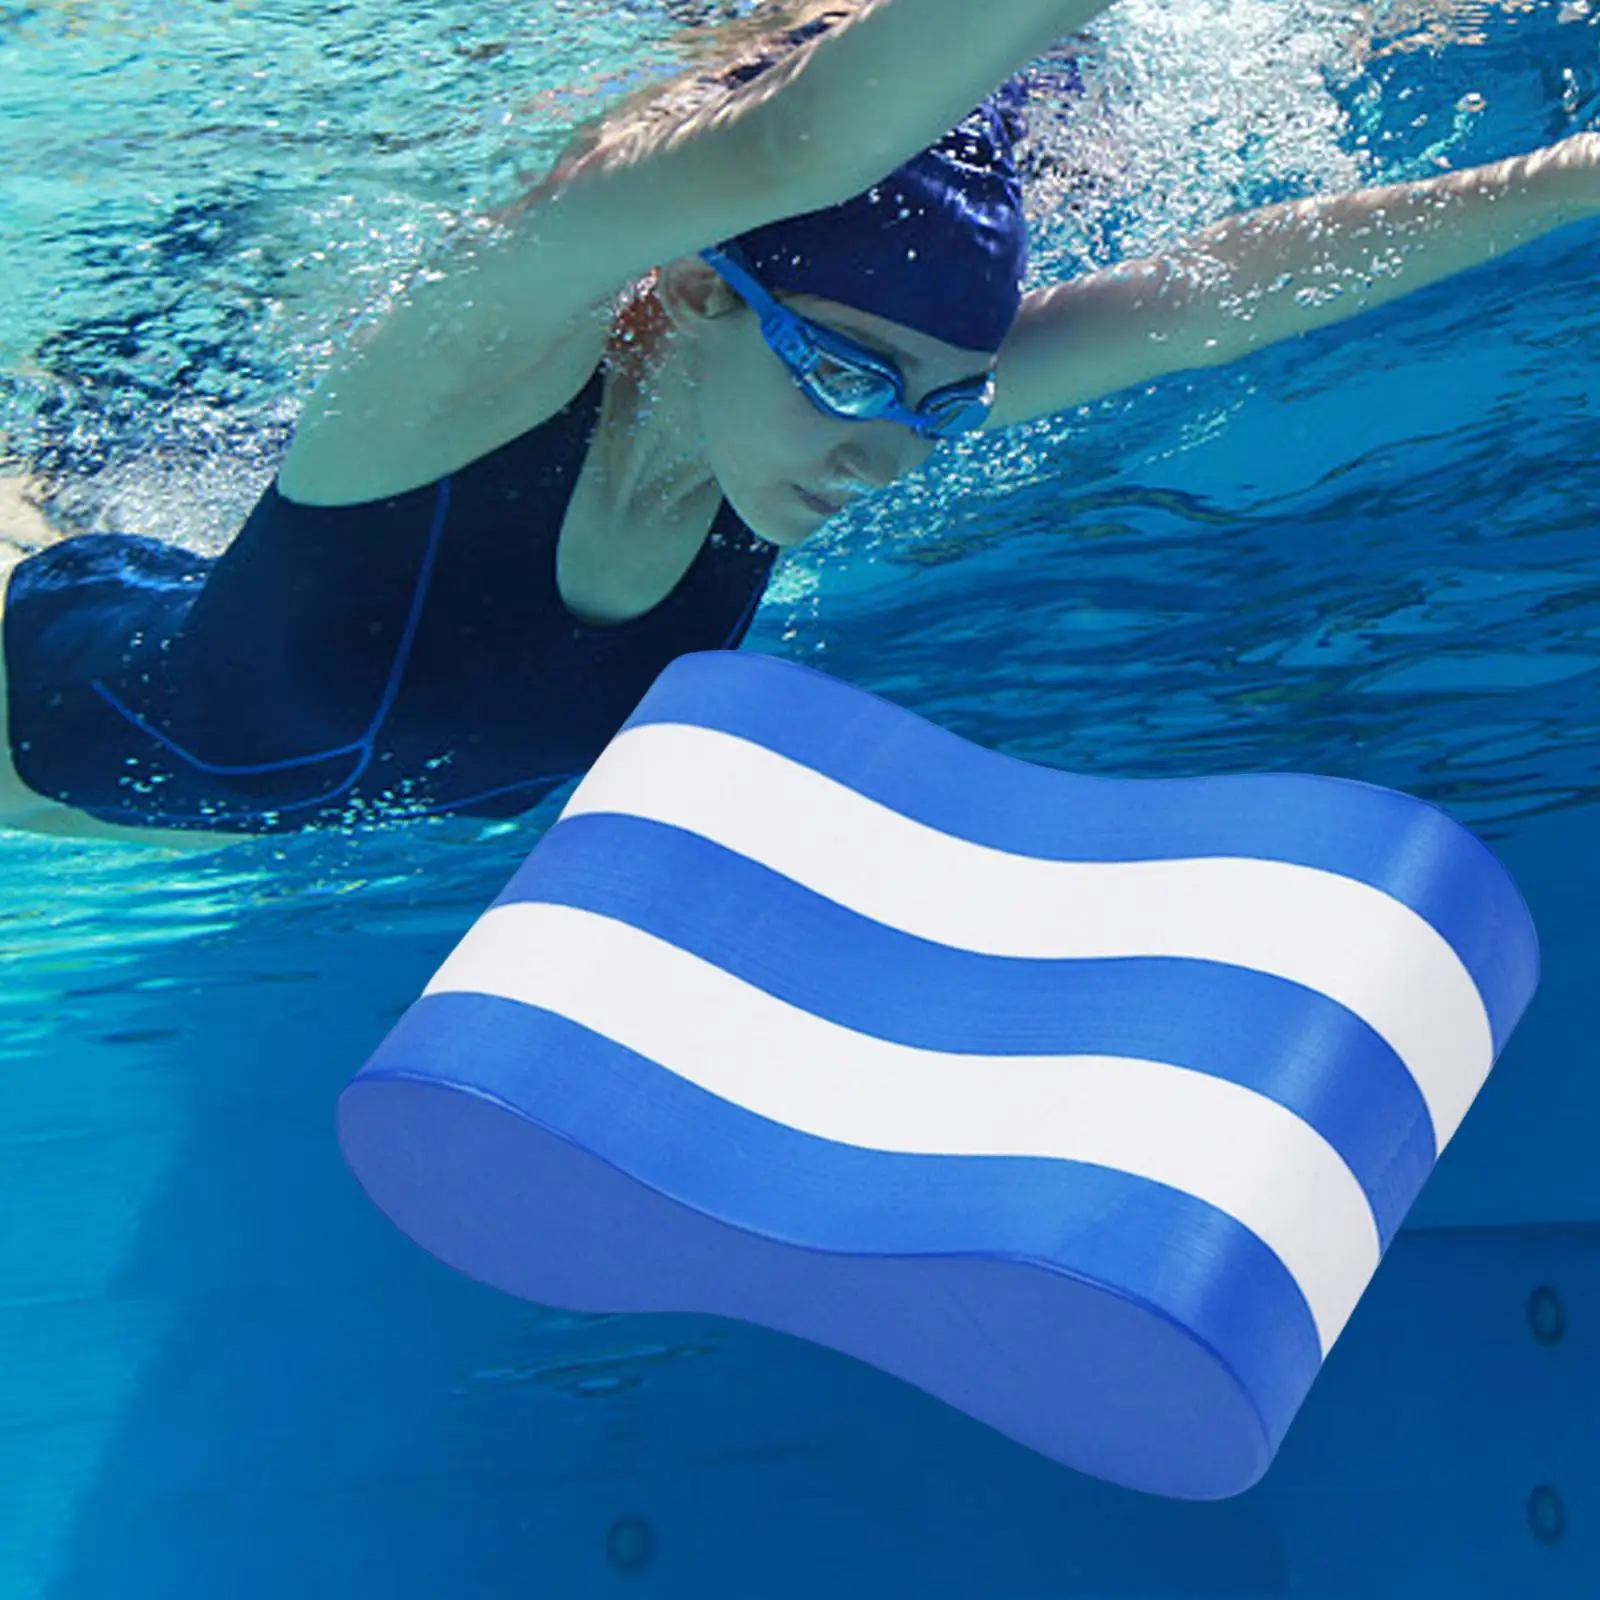 Pull Buoy Leg  Pull Buoy Swimming Board Training Equipment Aquatic Fitness